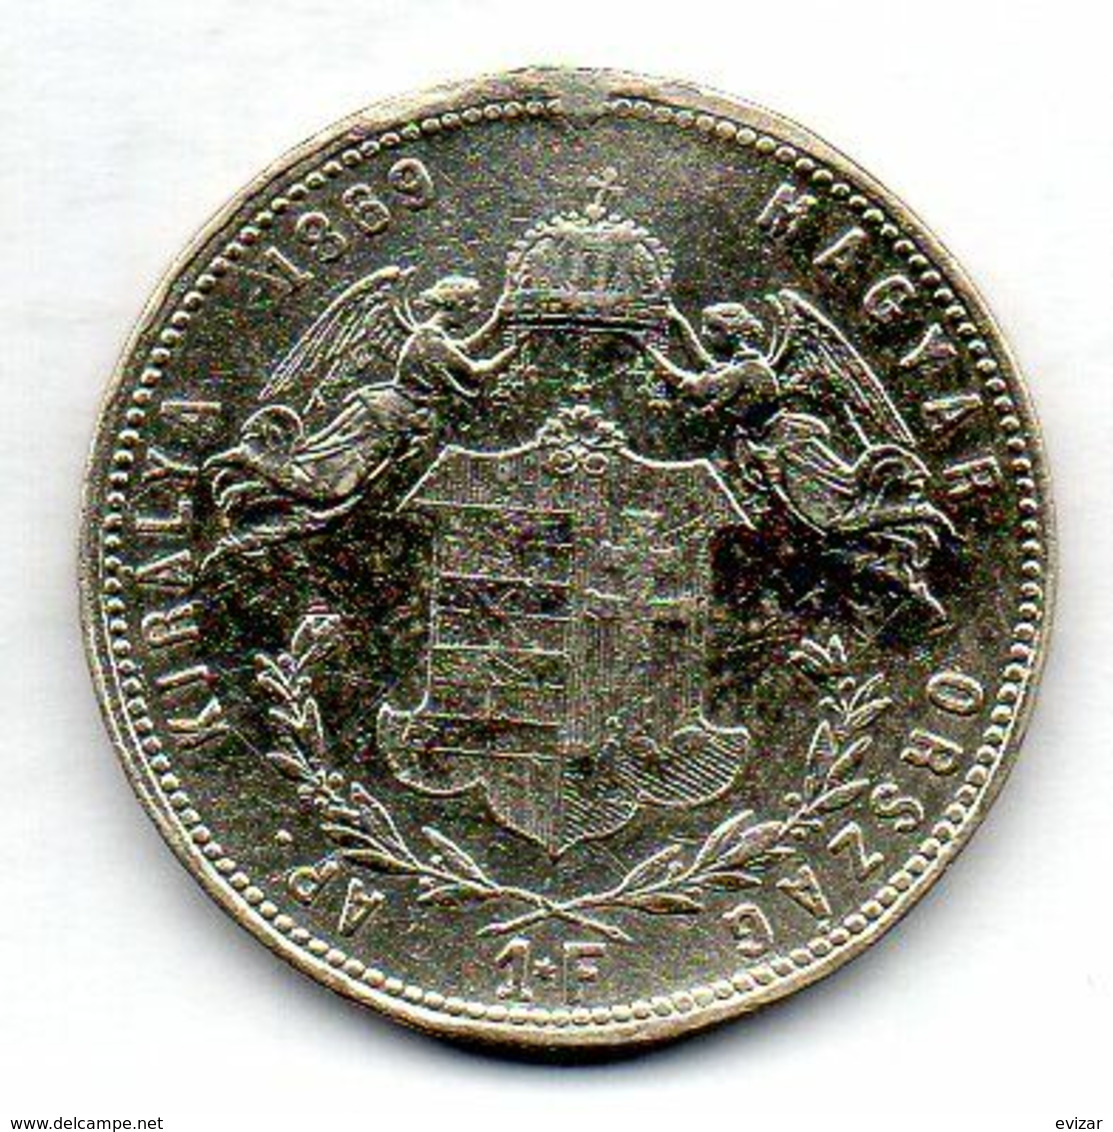 HUNGARY, 1 Forint, Silver, Year 1869, KM #449.2 - Hungary